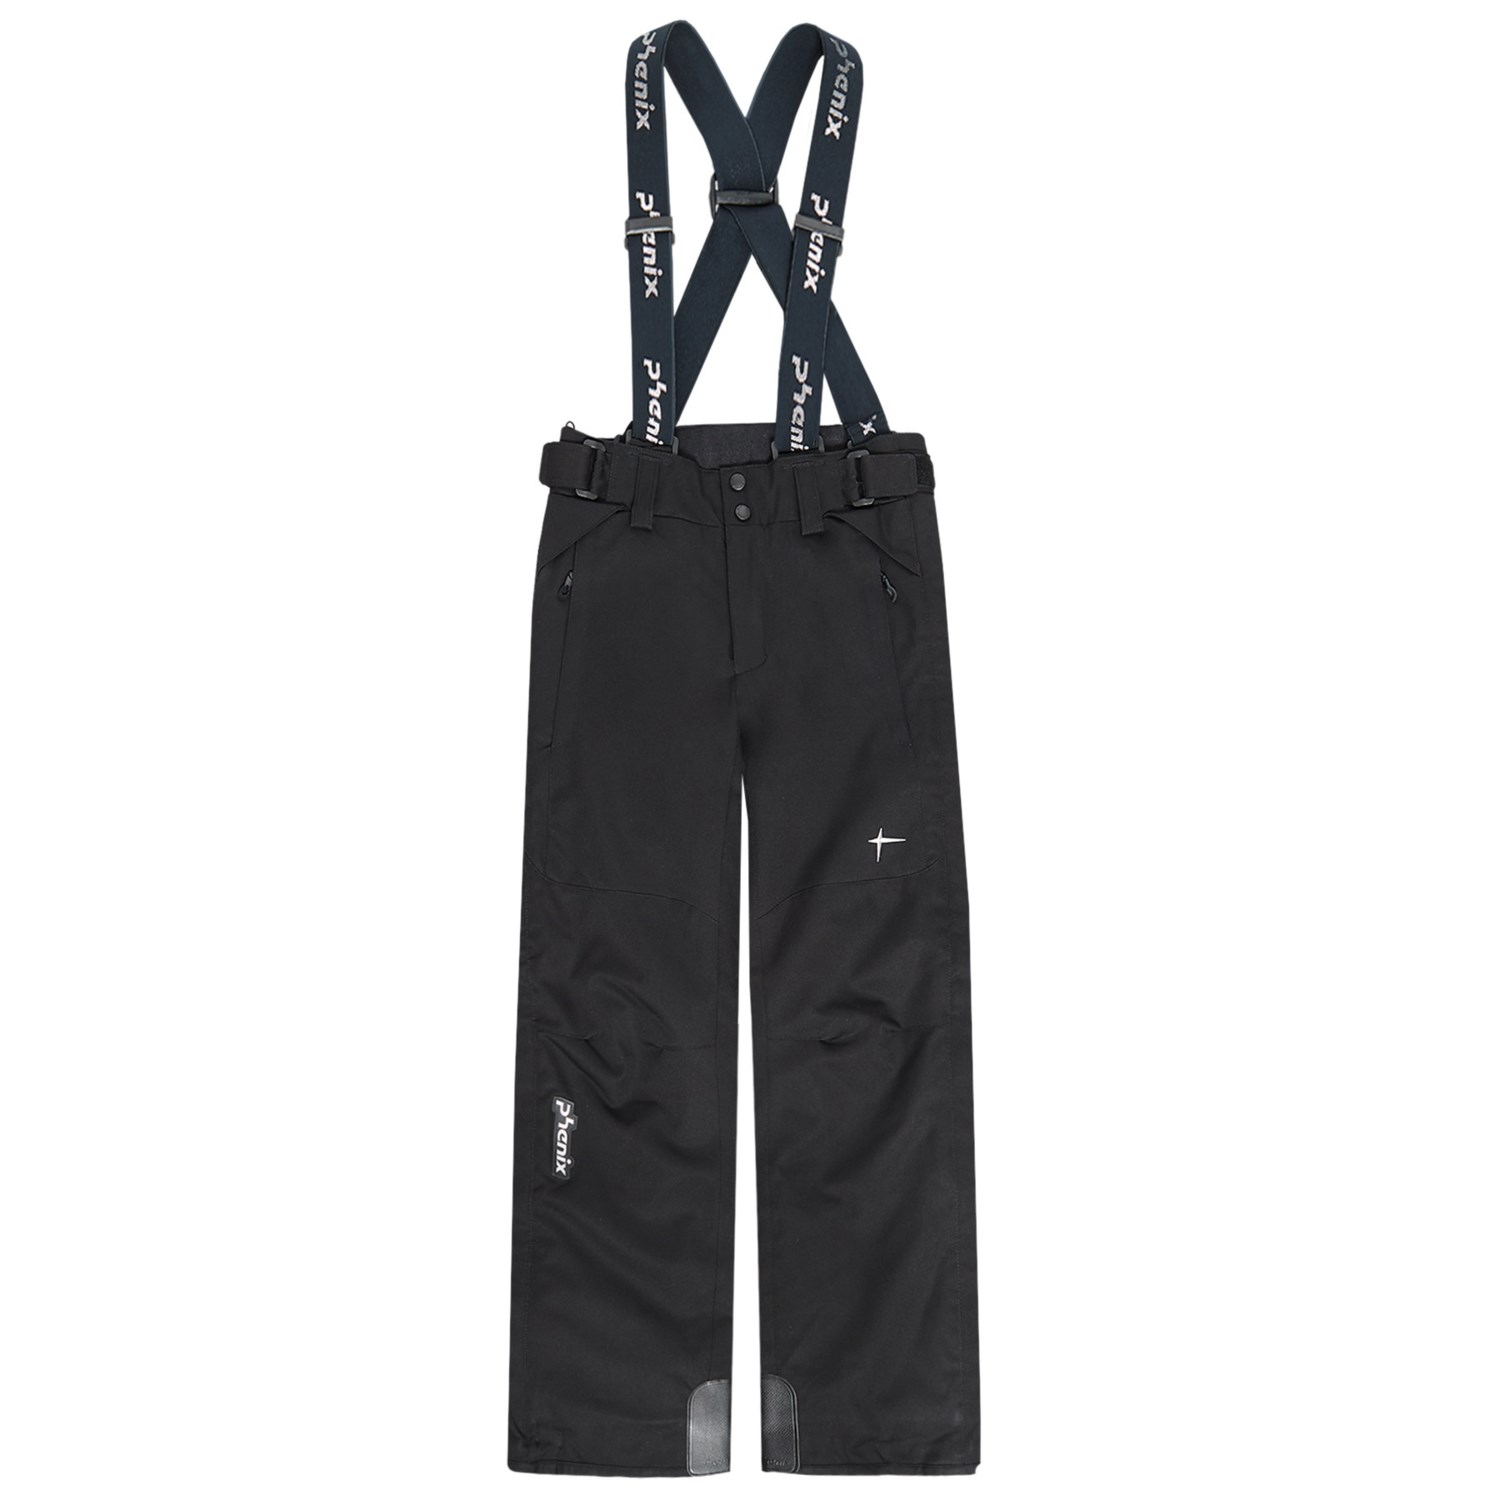 Phenix Norway Team Junior Salopette Ski Pants – Waterproof, Insulated